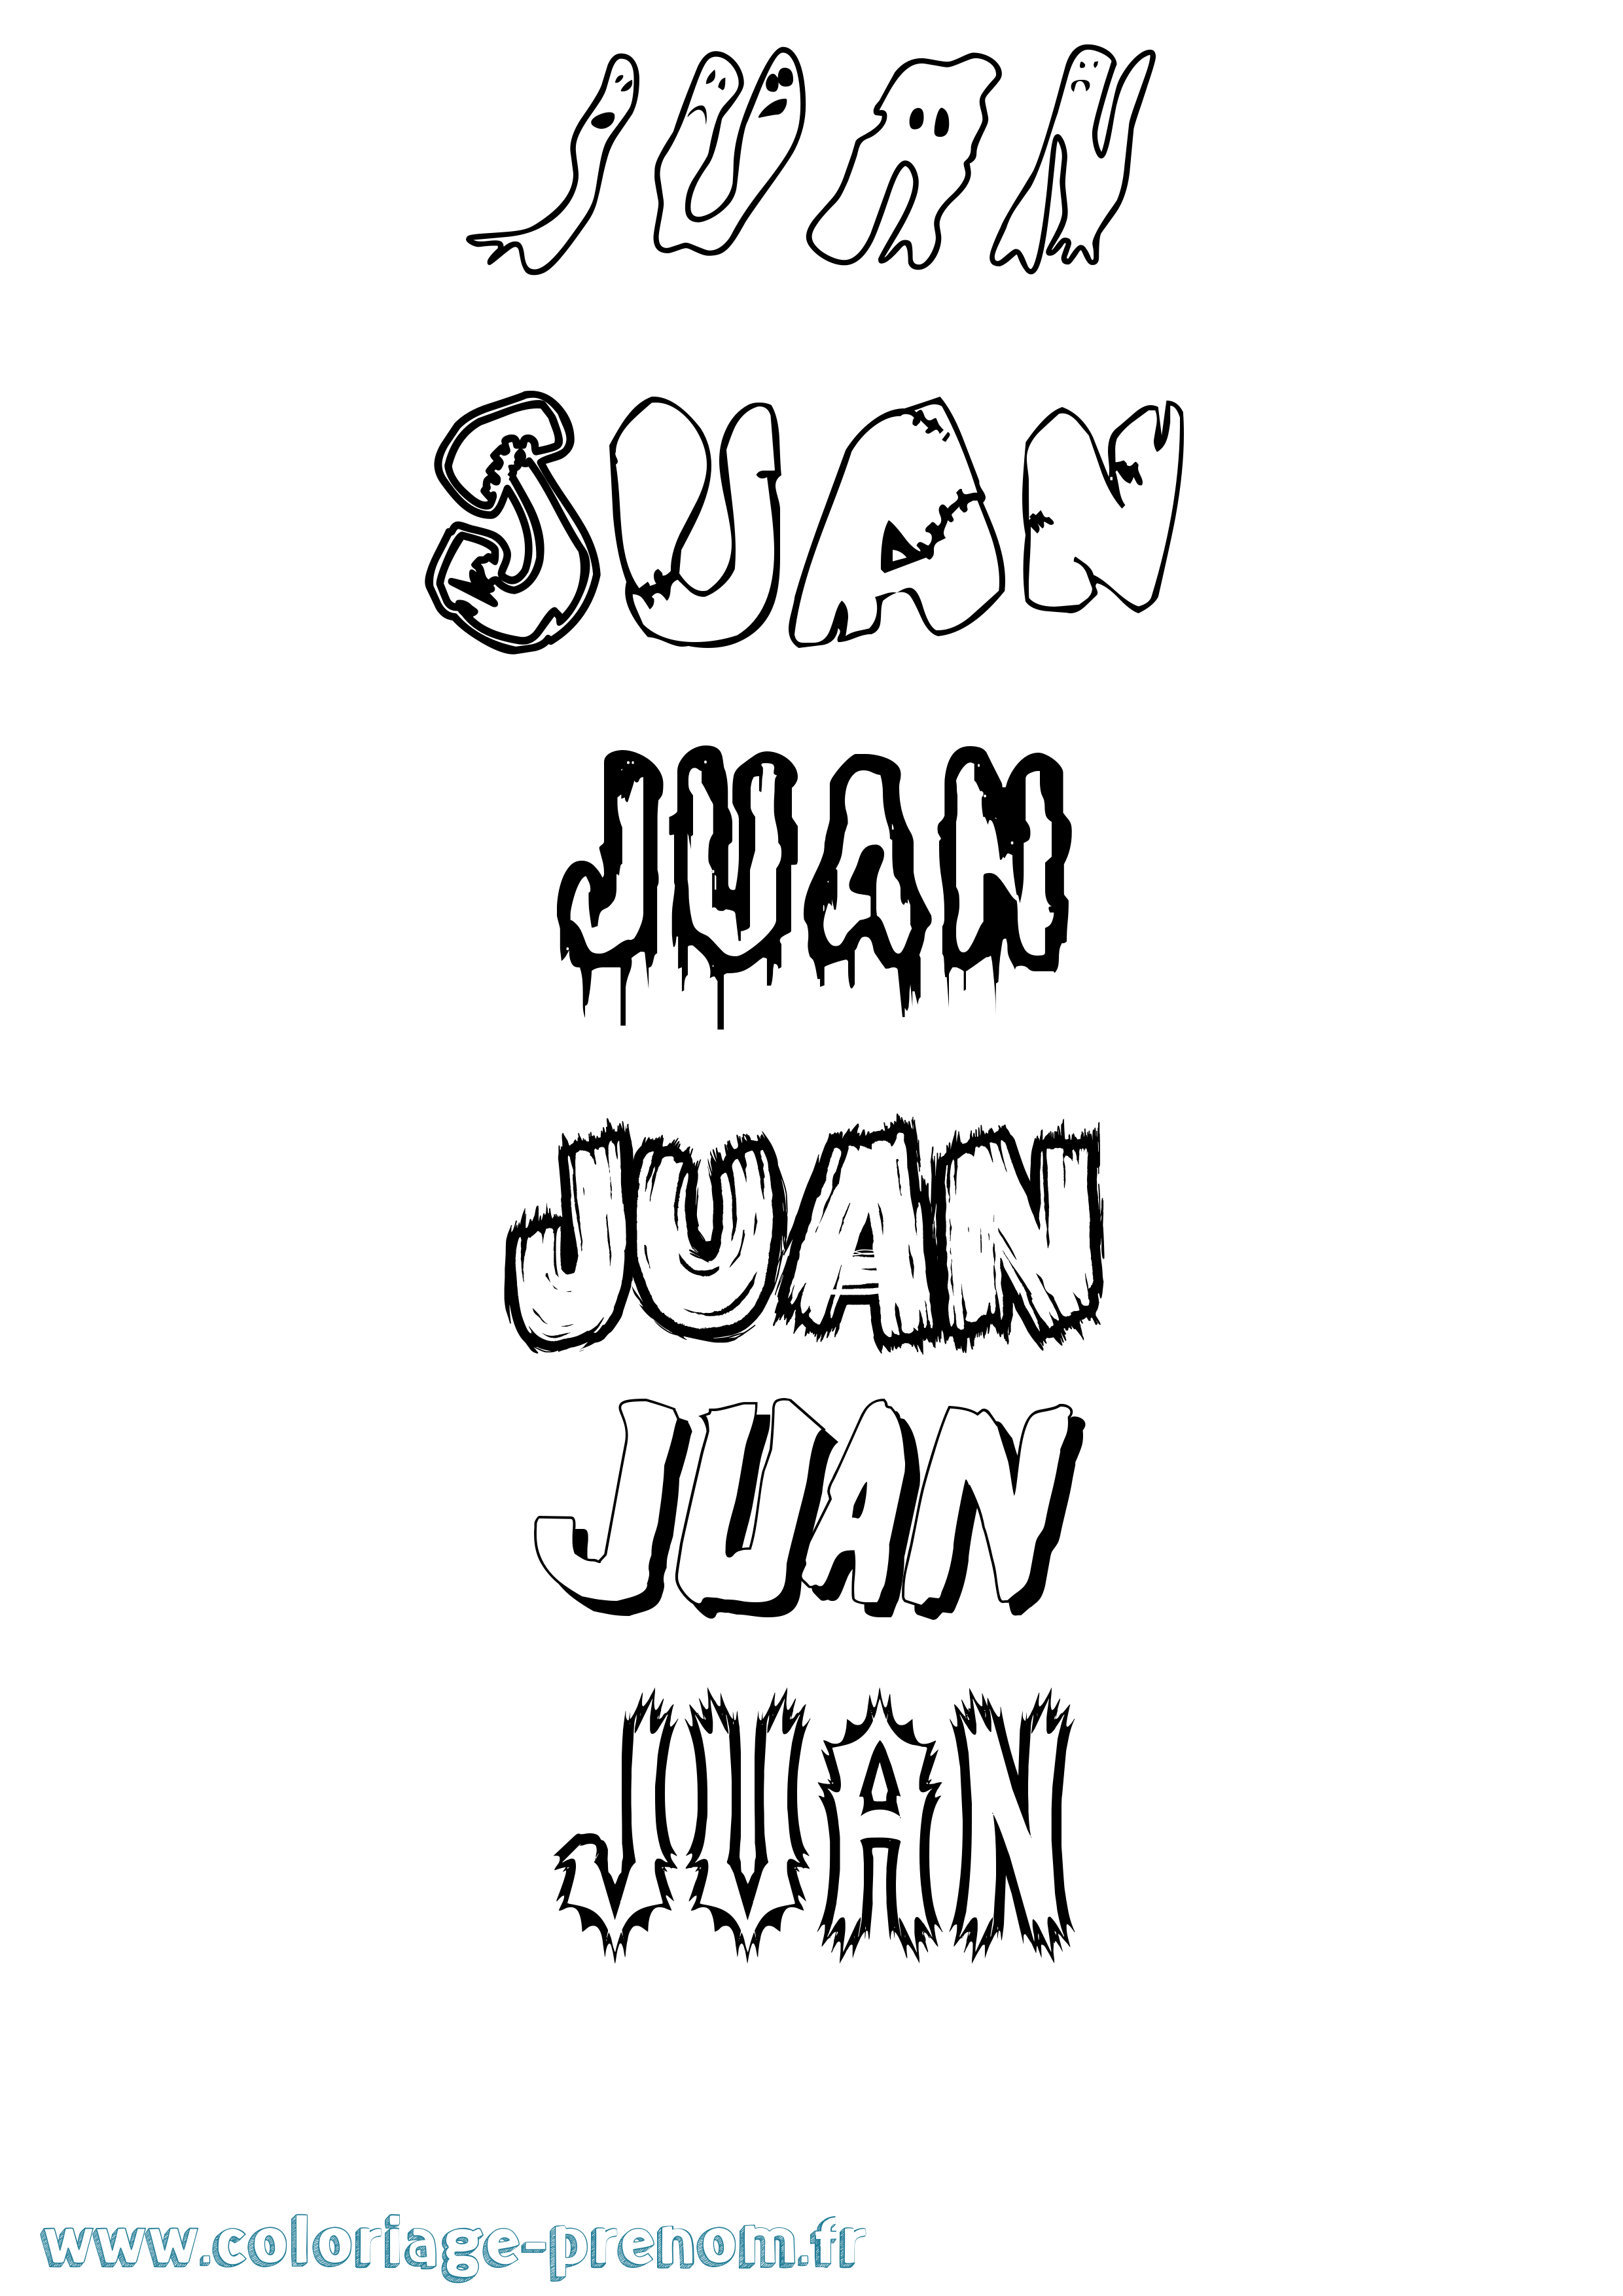 Coloriage prénom Juan